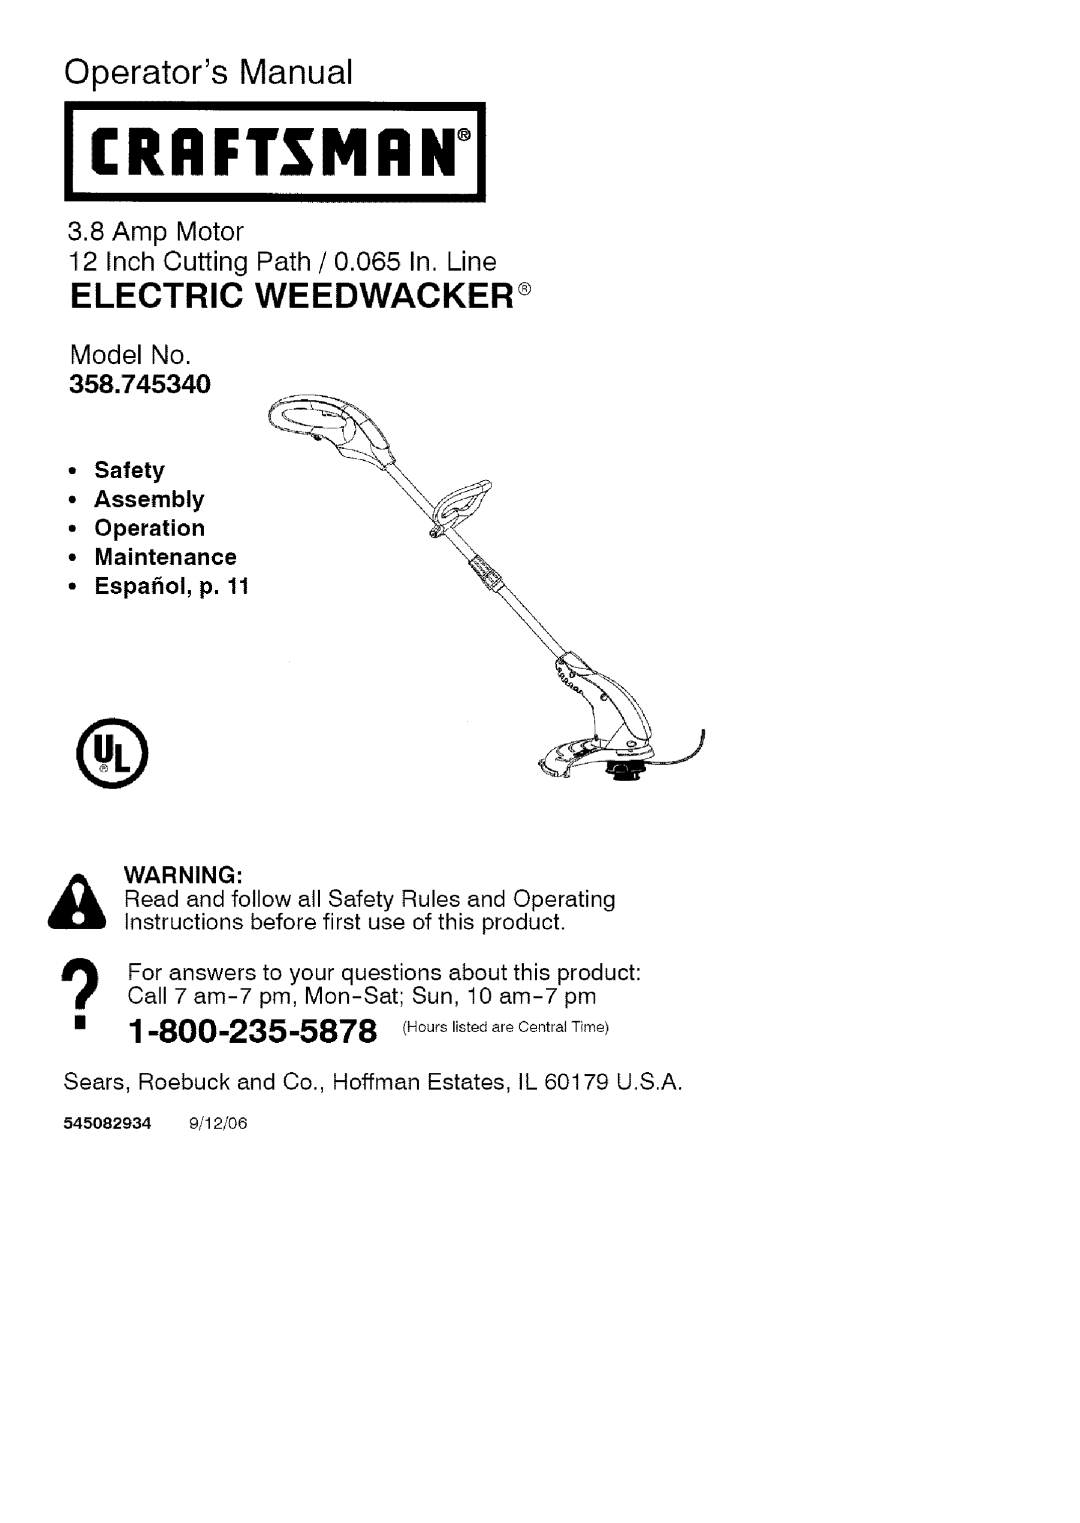 Craftsman 358.74534 manual Icrrftsmrni, Operators Manual, Electric Weedwacker, Safety Assembly, Maintenance Espa6ol, p 